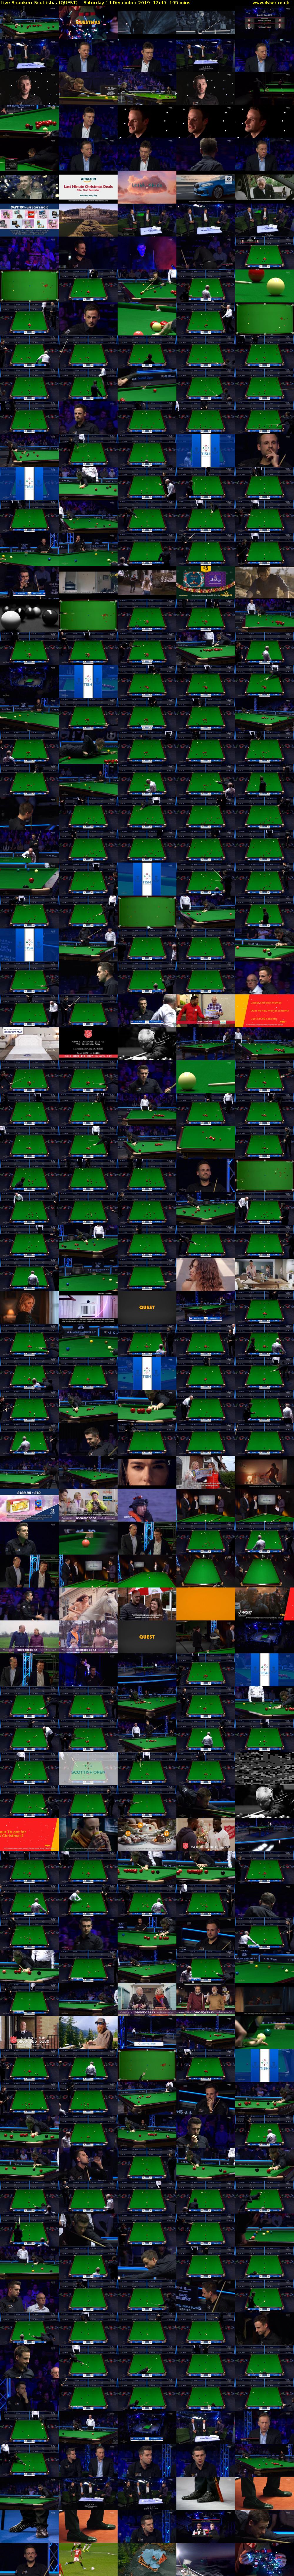 Live Snooker: Scottish... (QUEST) Saturday 14 December 2019 12:45 - 16:00